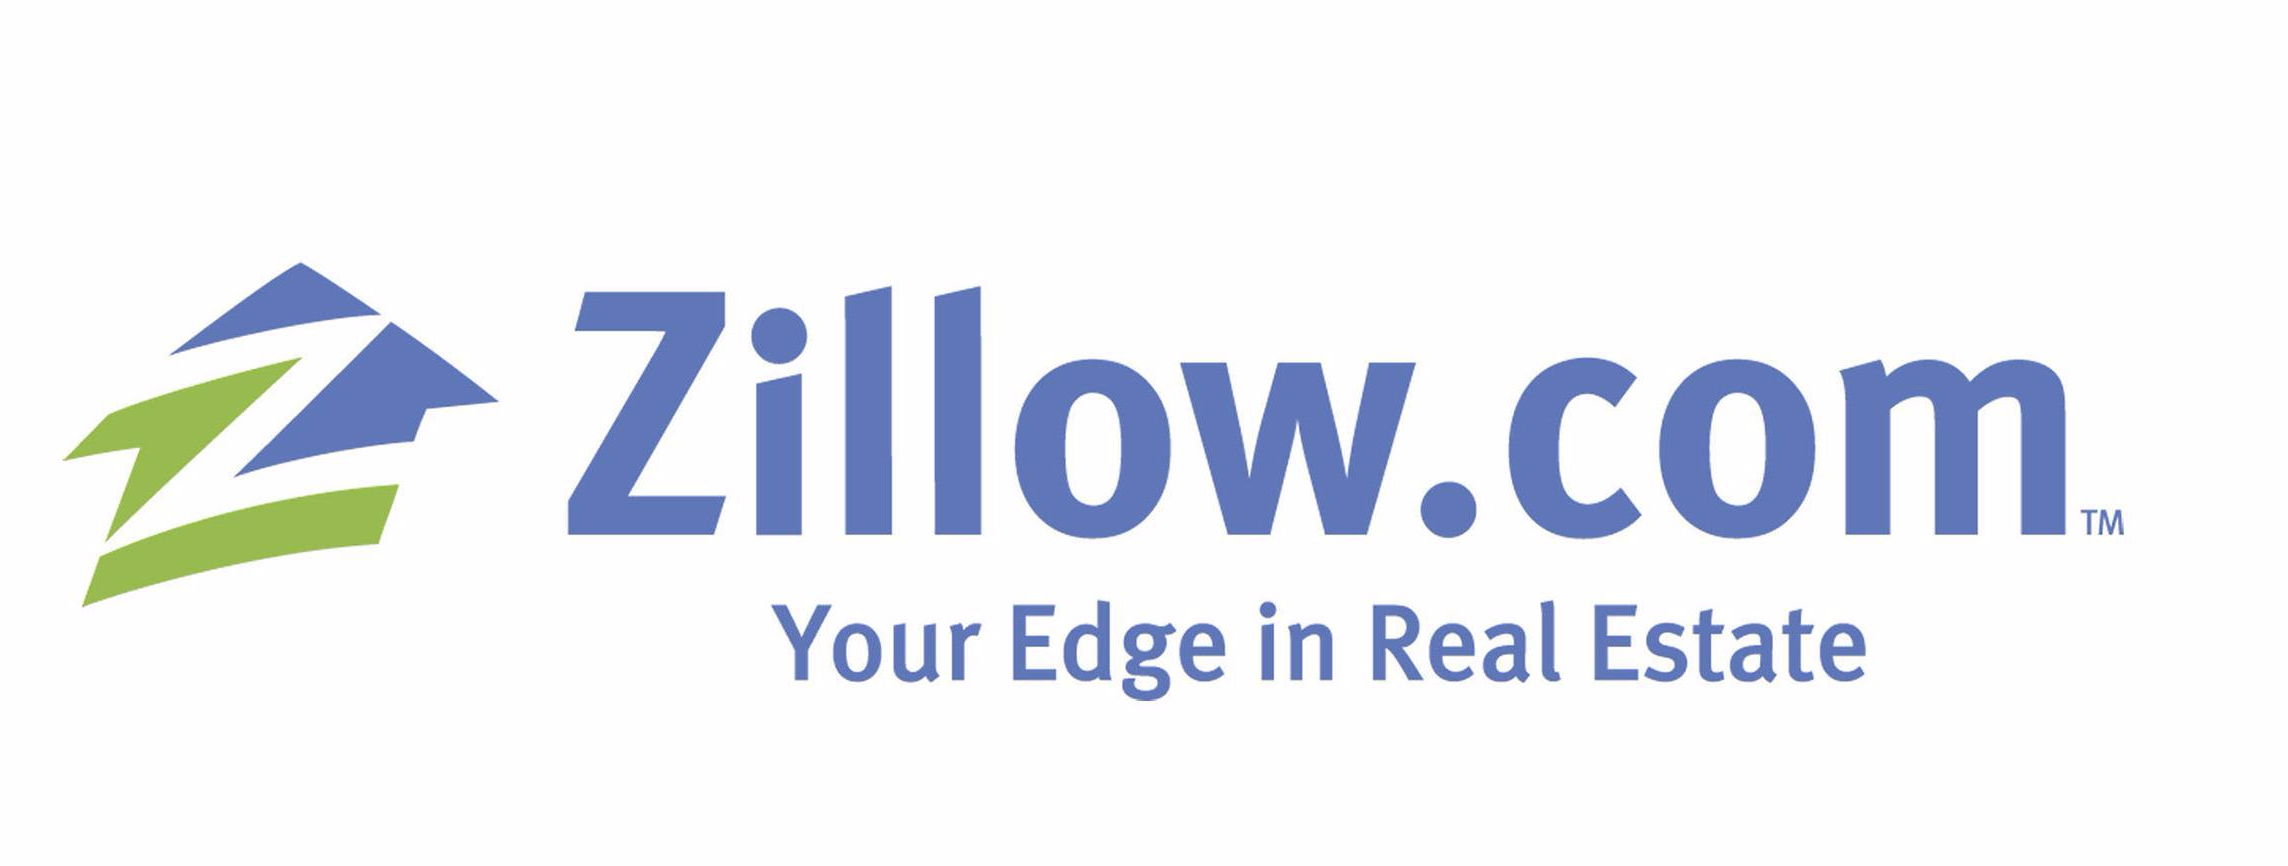 Zillow tumble on Amazon news. See Stockwinners.com Market Radar